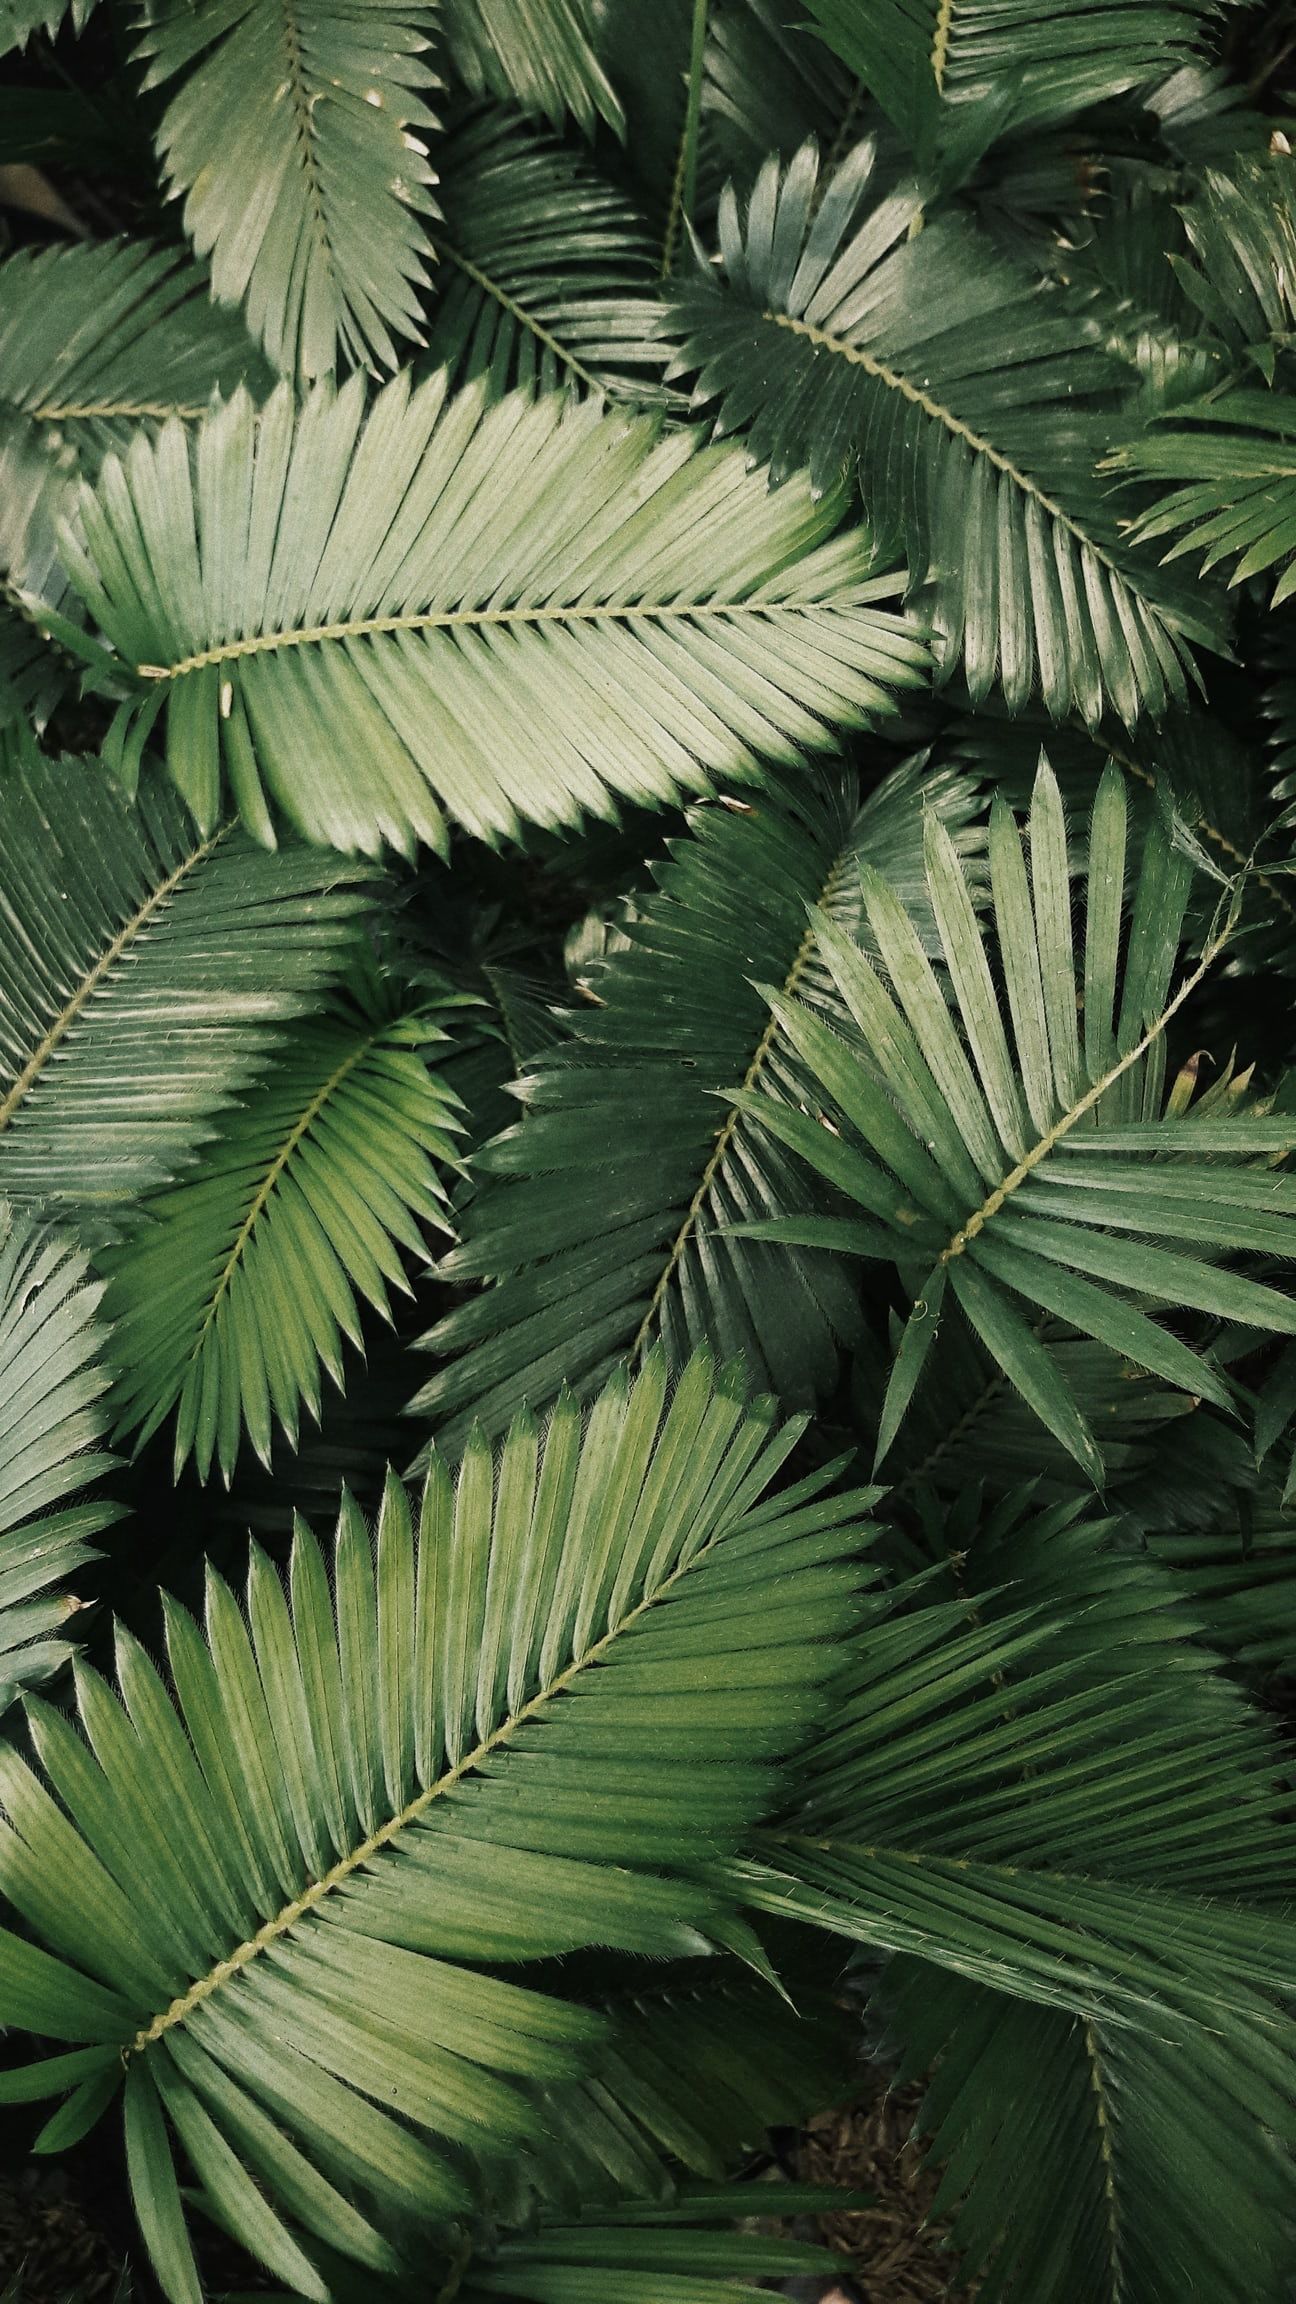 A green palm leaf background - Plants, leaves, tropical, jungle